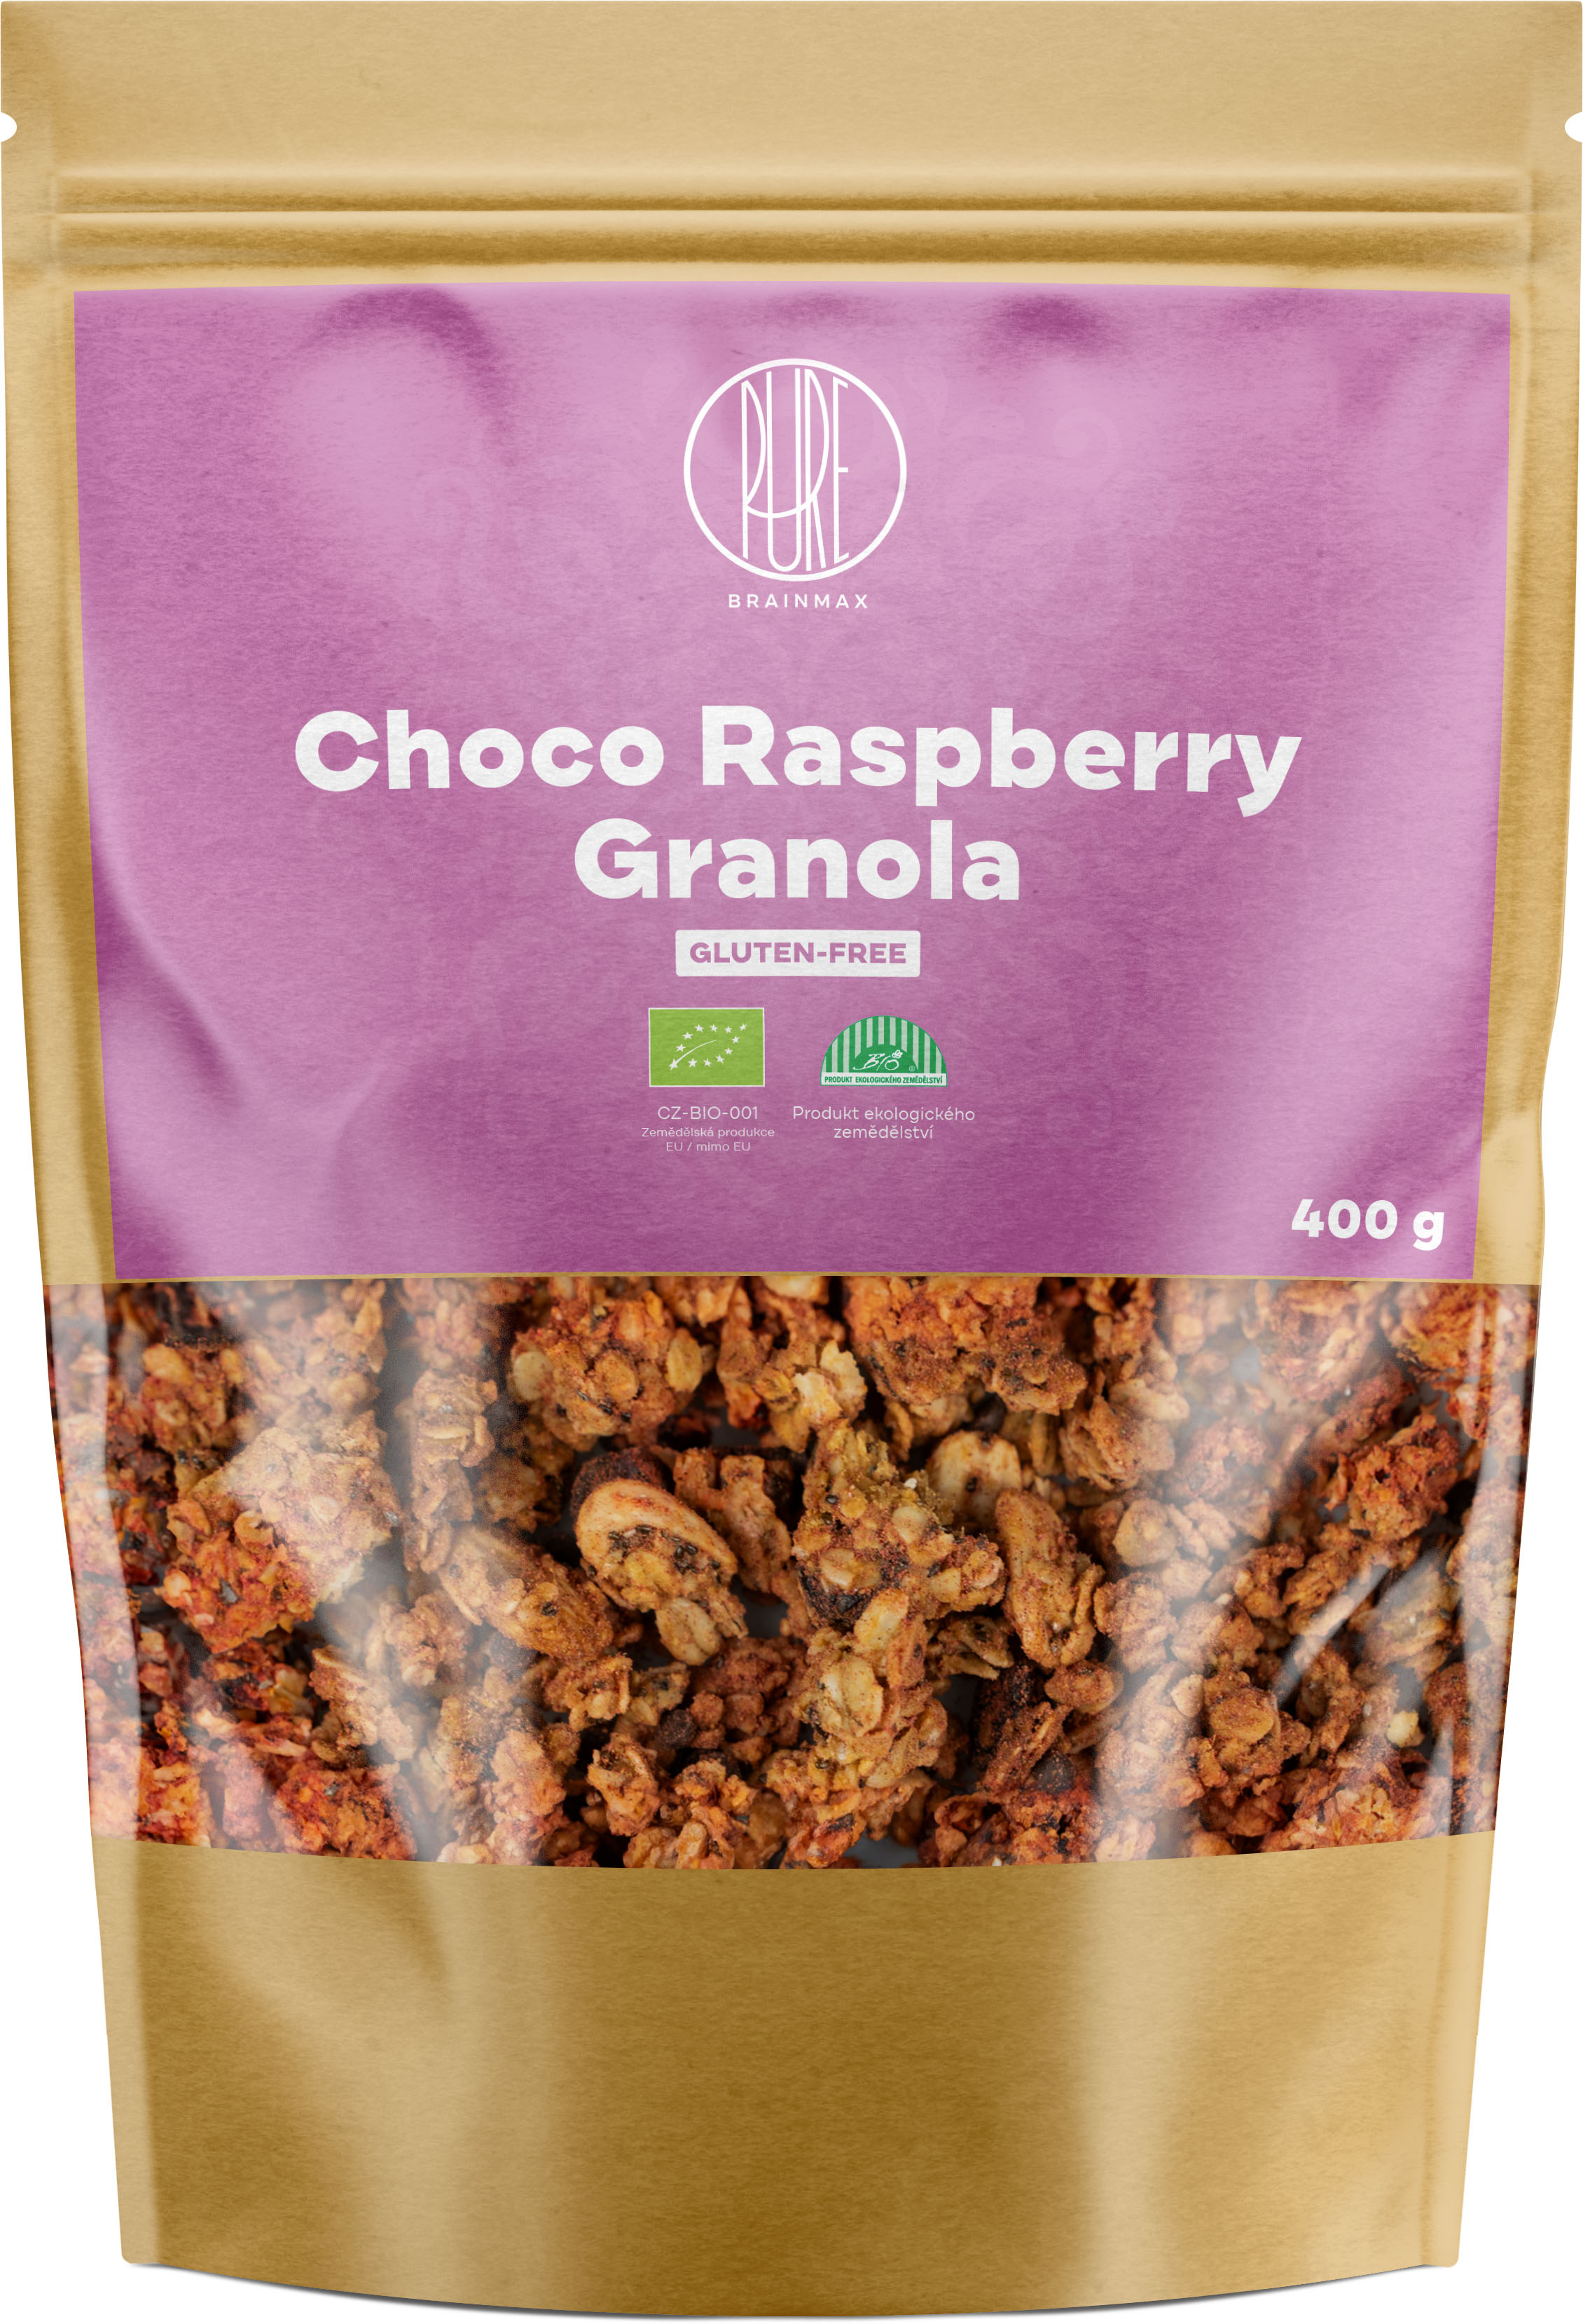 Levně BrainMax Pure Choco Raspberry Granola, granola s čokoládou a malinami, BIO, 400 g *CZ-BIO-001 certifikát / Zapečené vločky s čokoládou a malinami